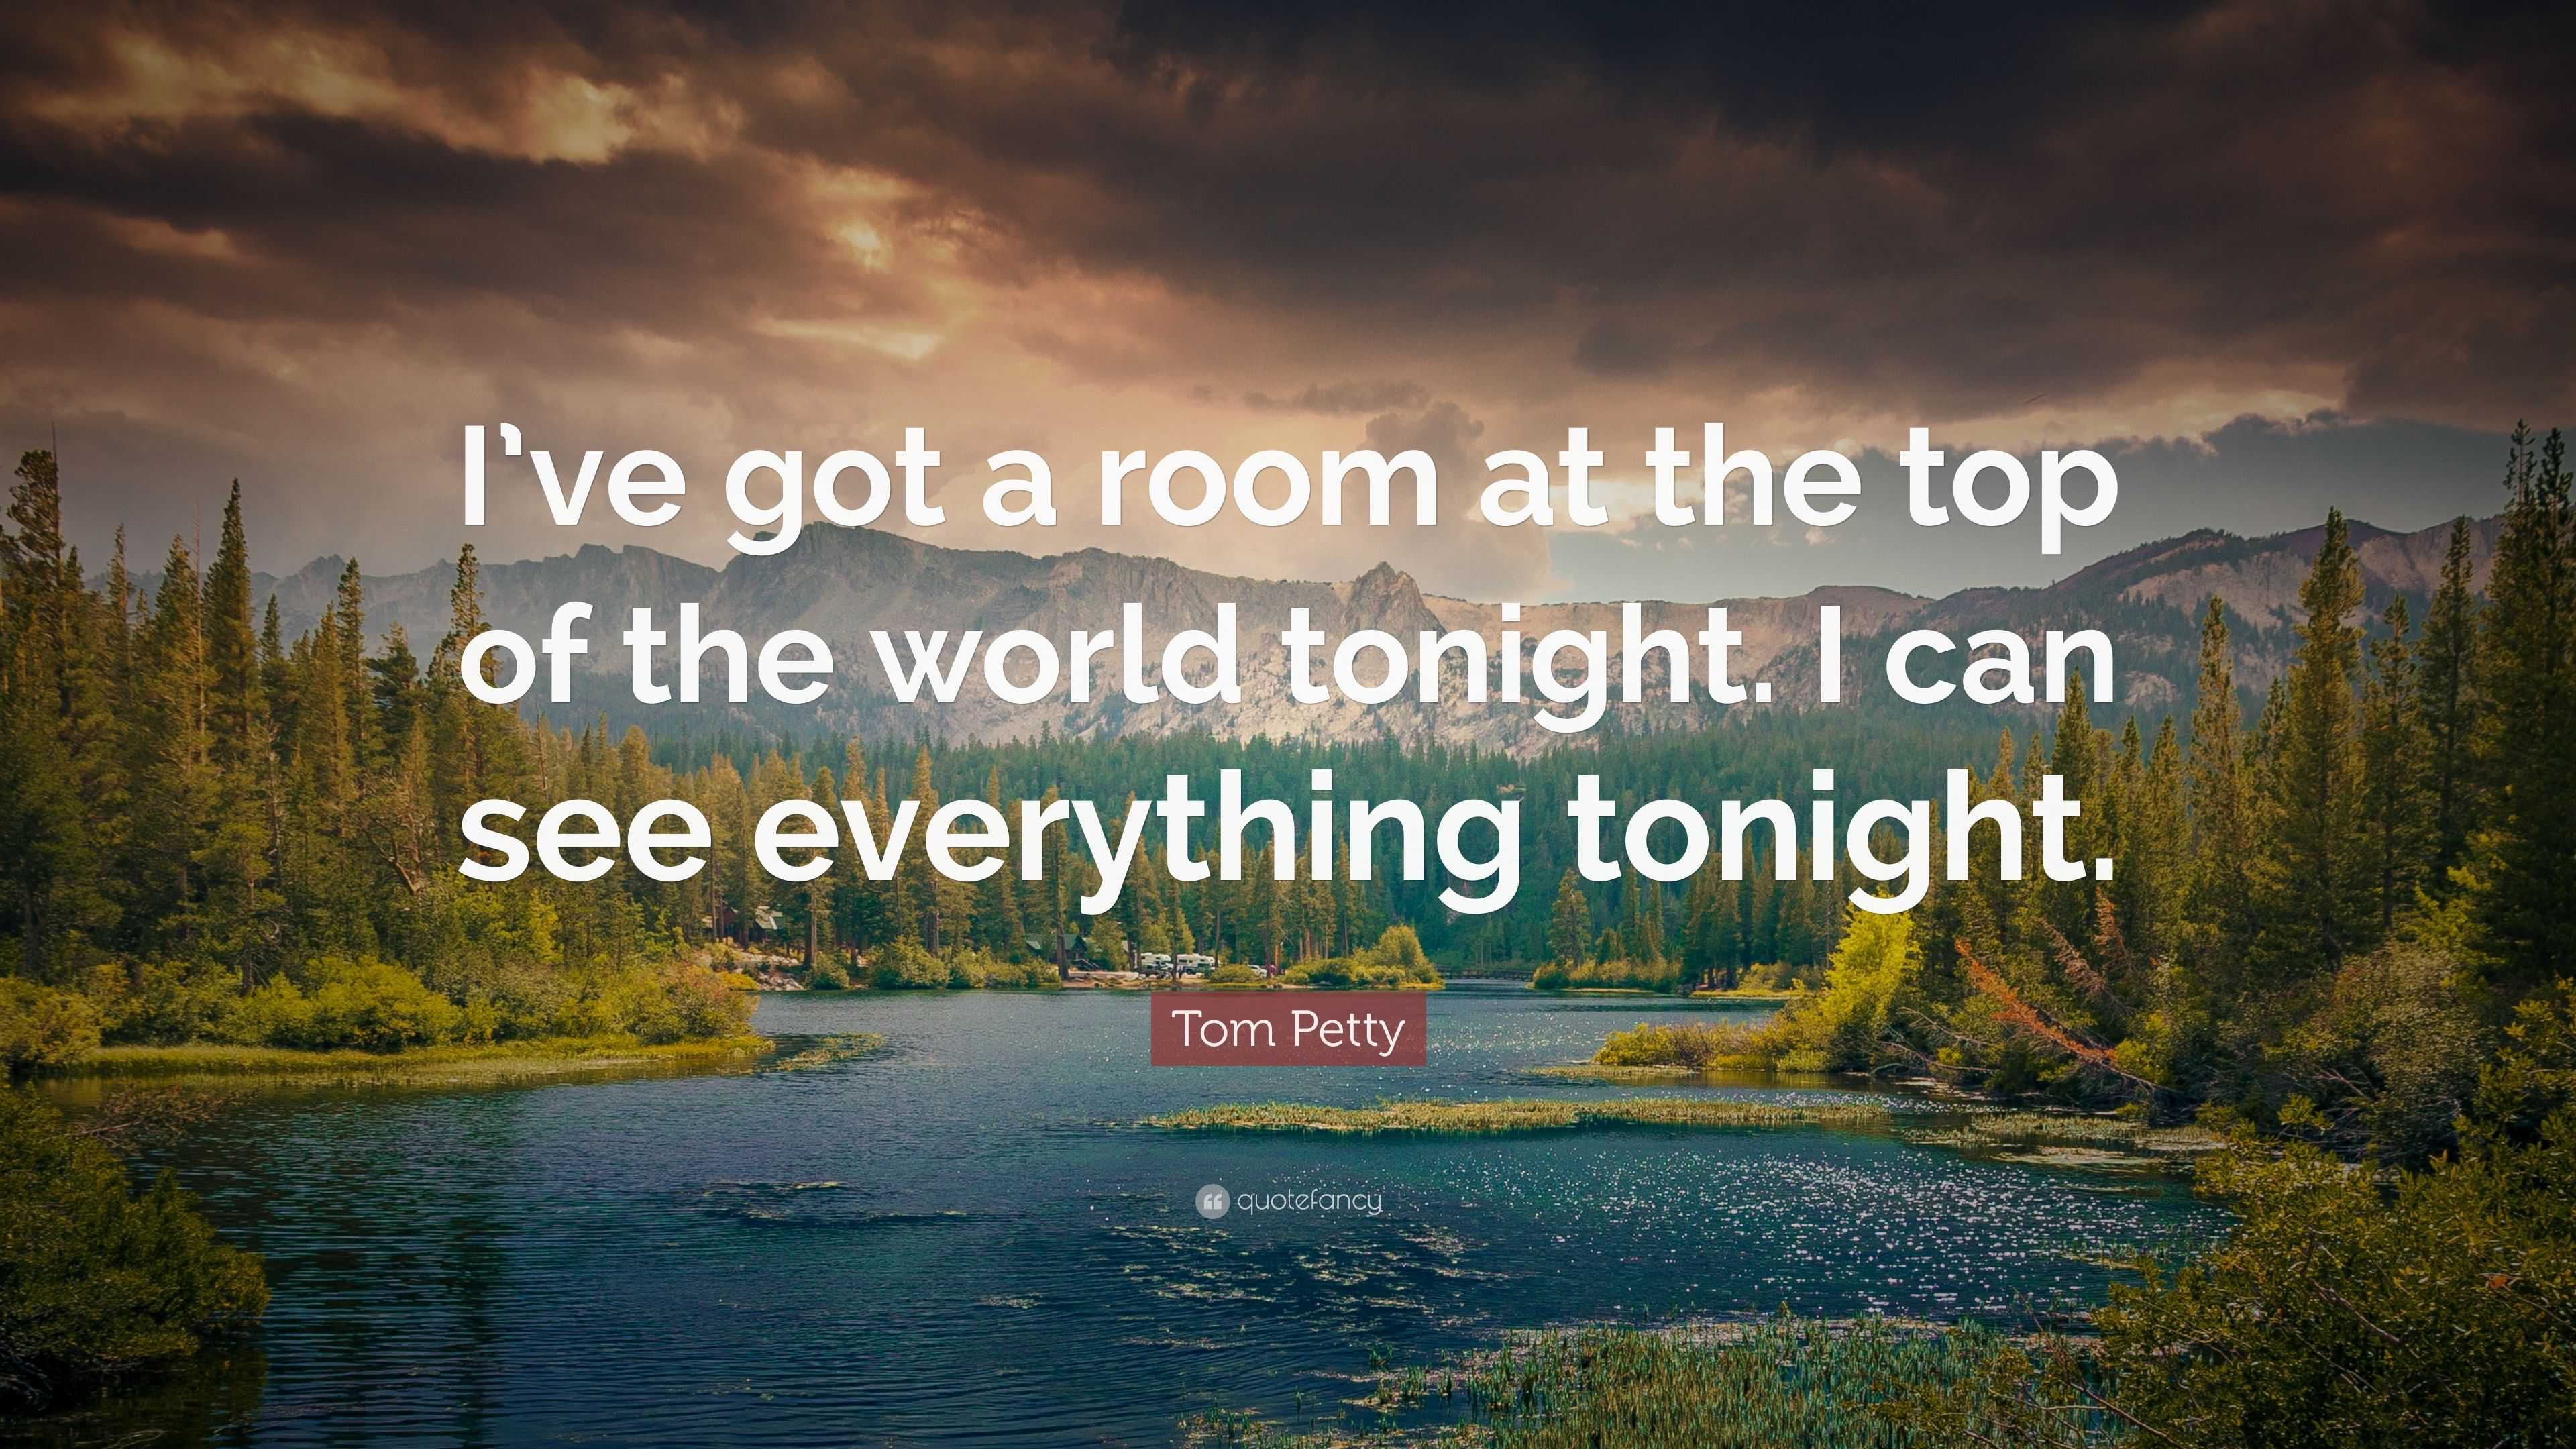 i got a room at the top of the world tonight lyrics